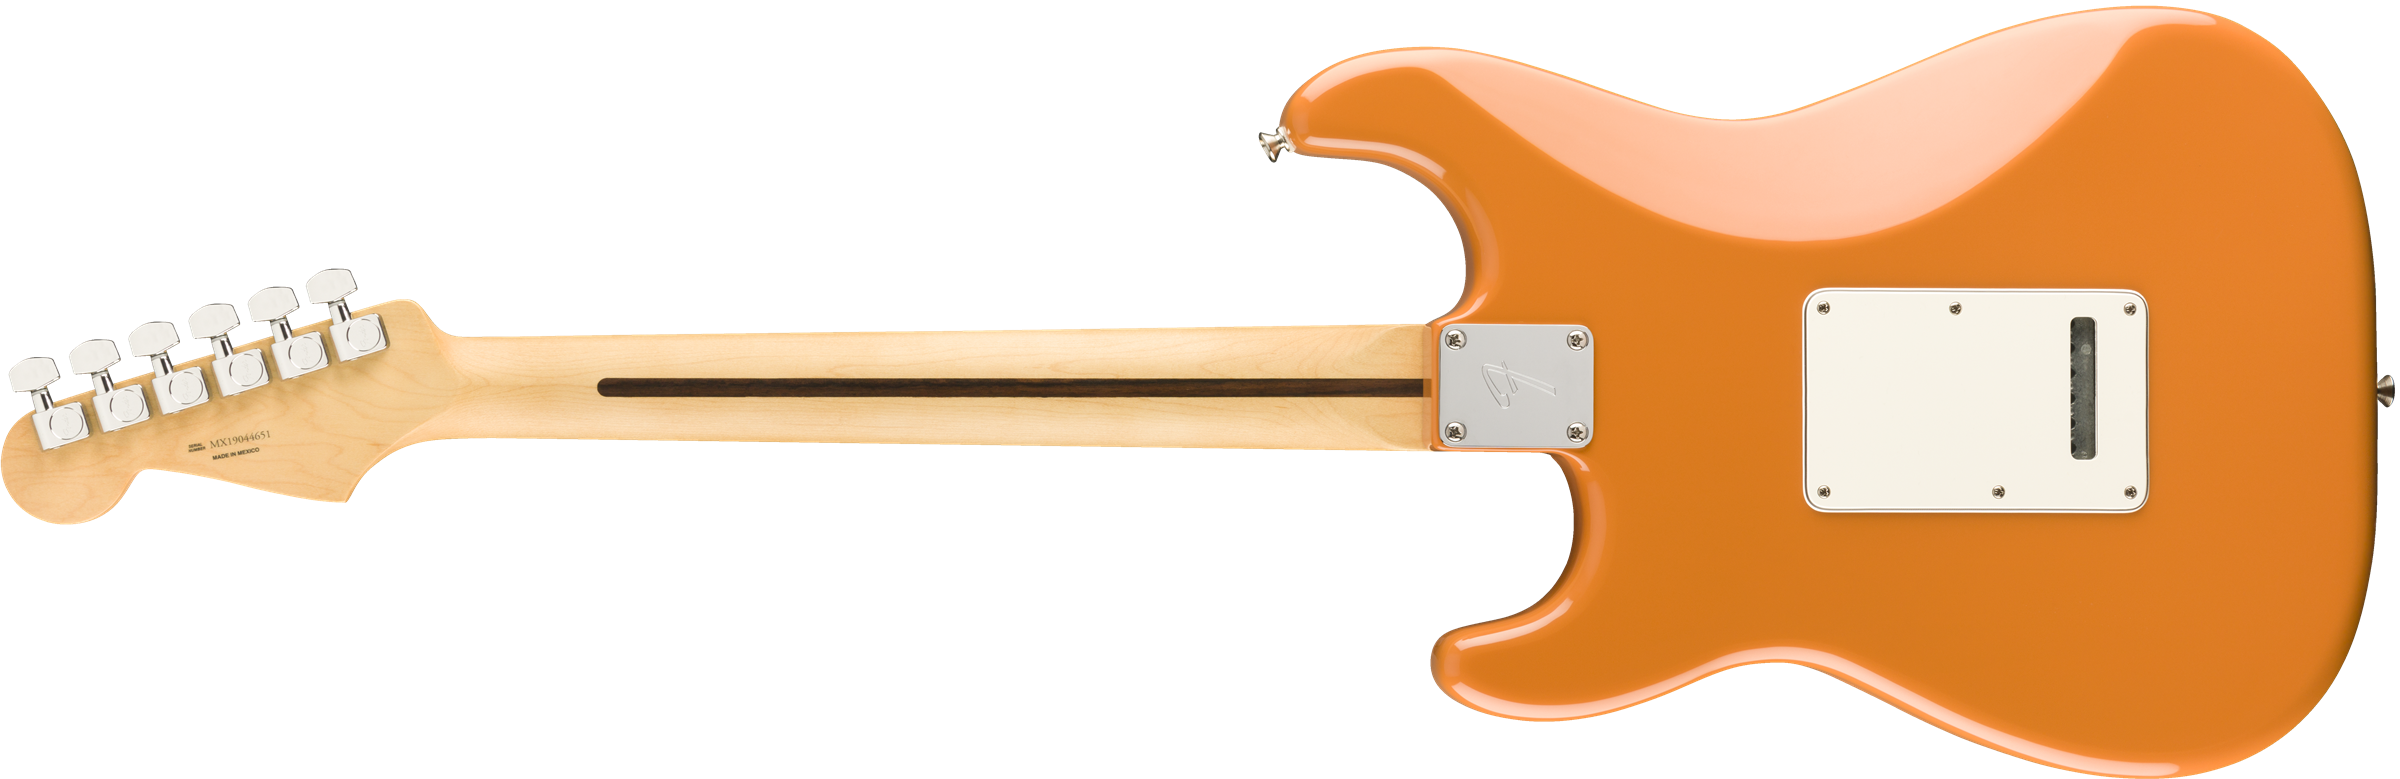 Fender Strat Player Mex Hss Pf - Capri Orange - Str shape electric guitar - Variation 1